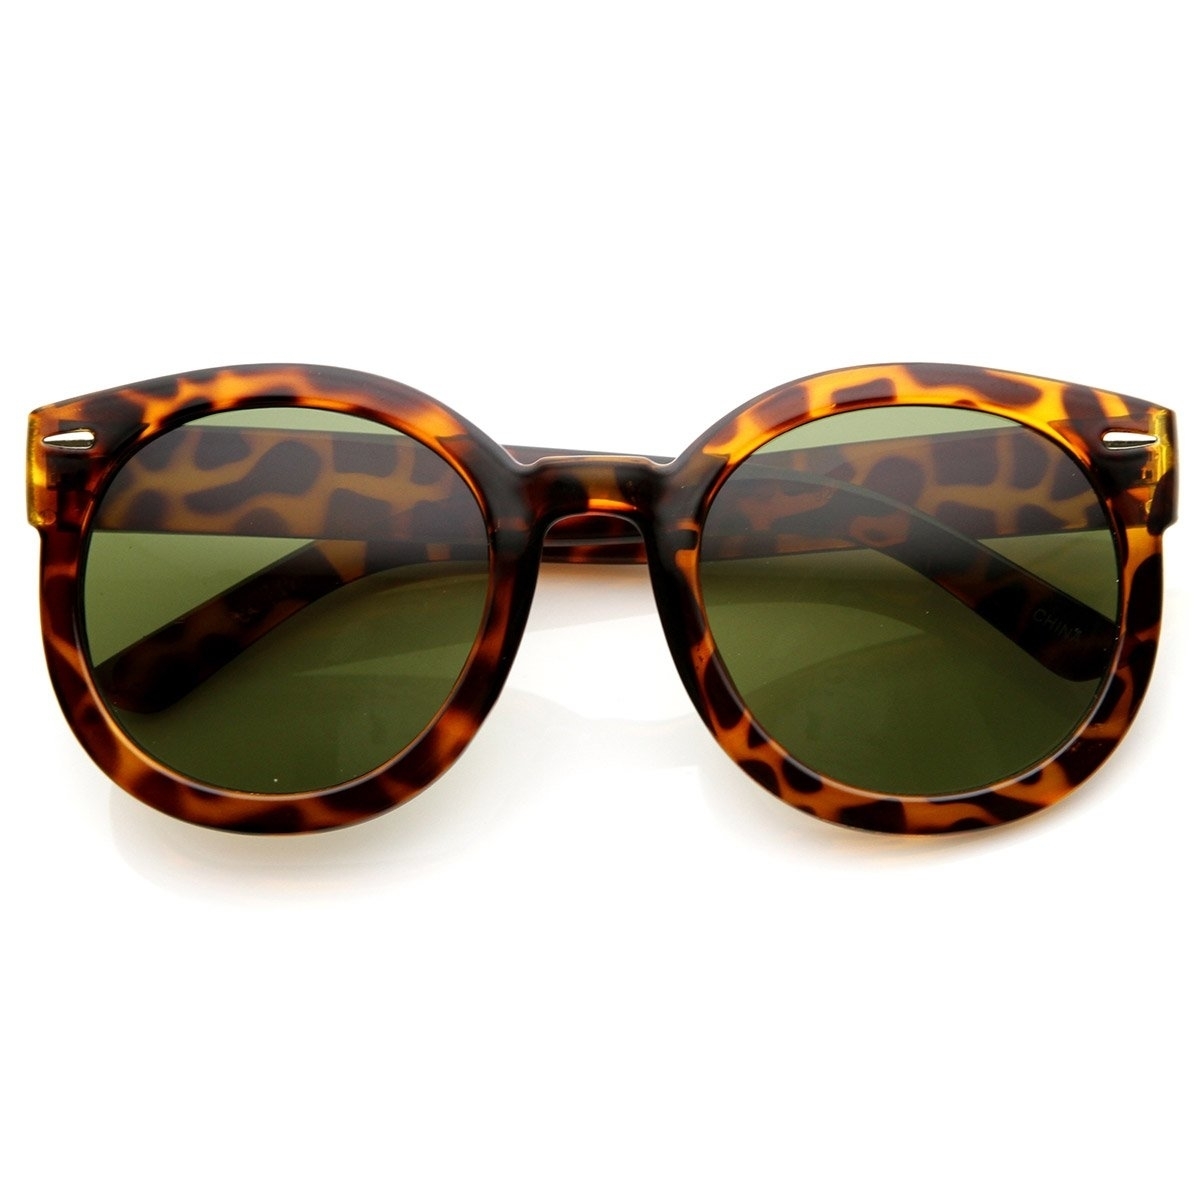 Womens Plastic Sunglasses Oversized Retro Style With Metal Rivets - Black Smoke